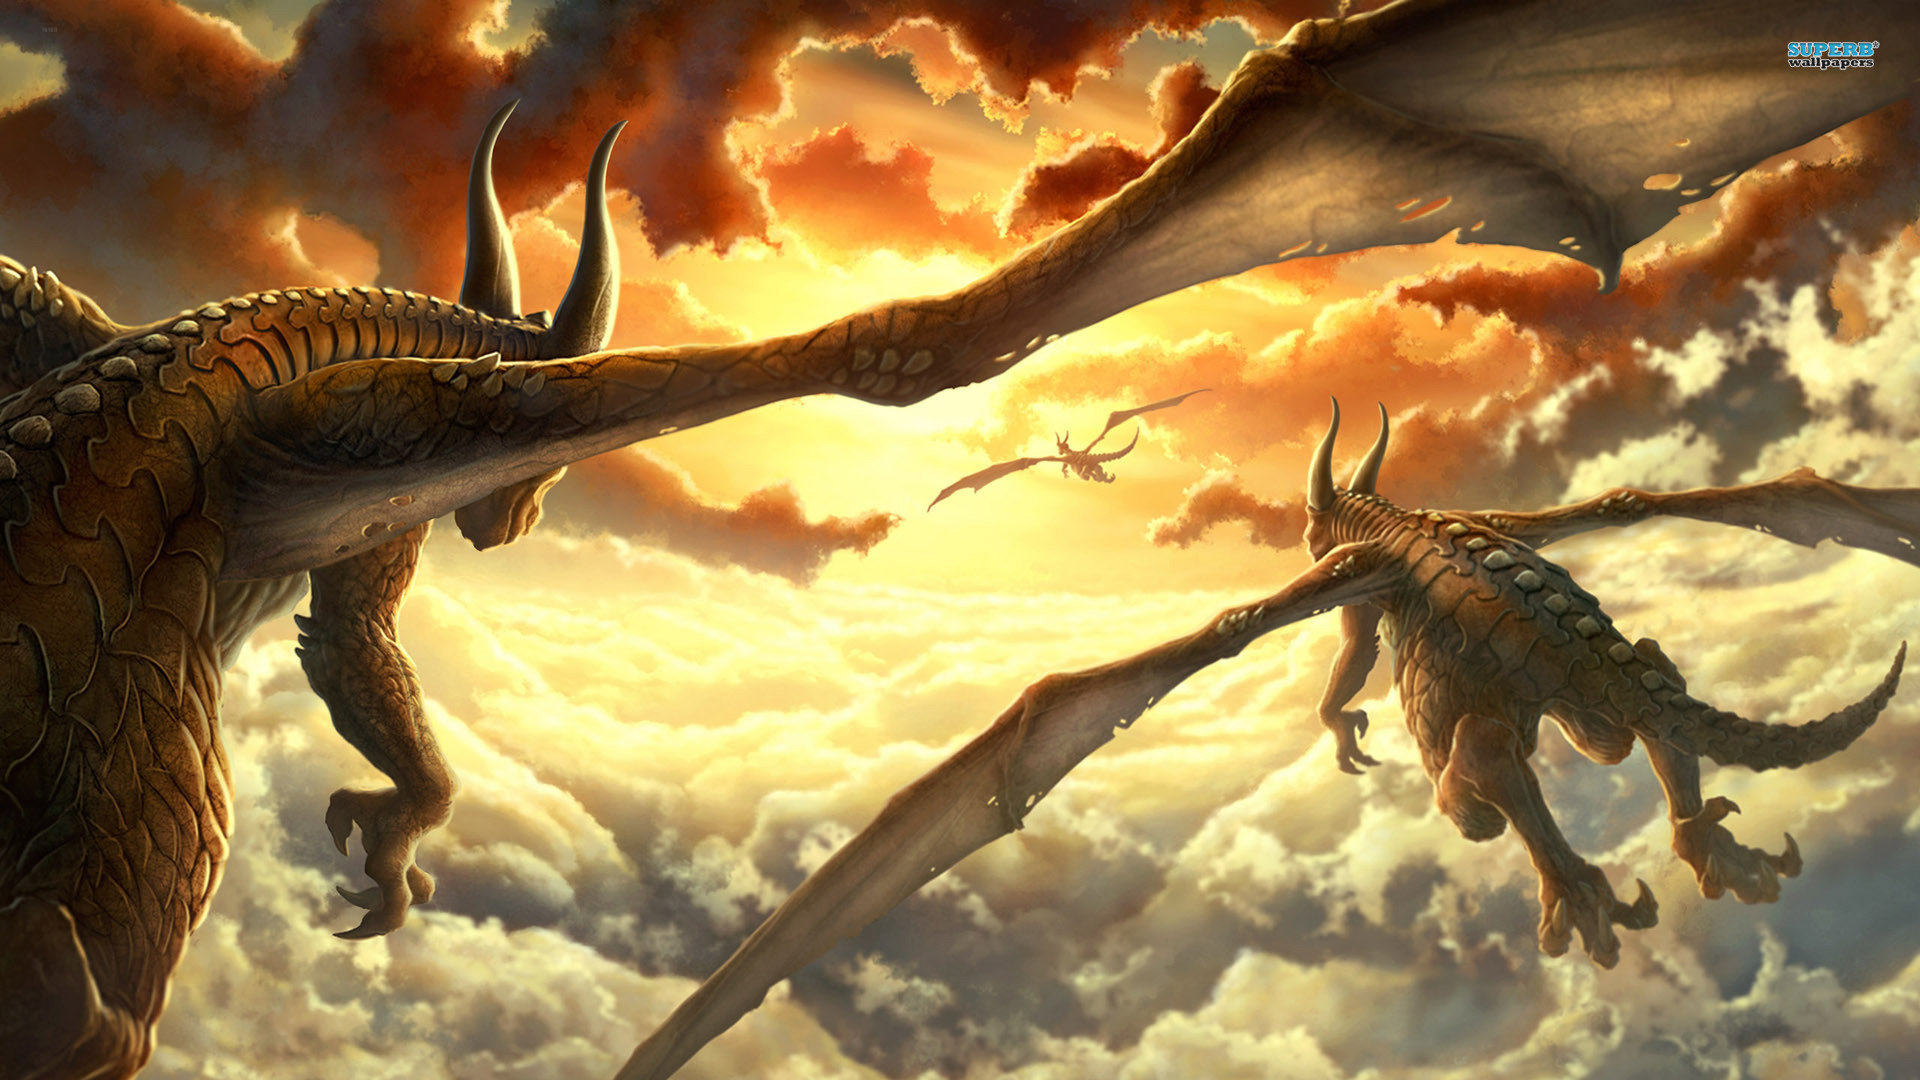 Dragon Wallpaper Widescreen. Age Of Wonders III